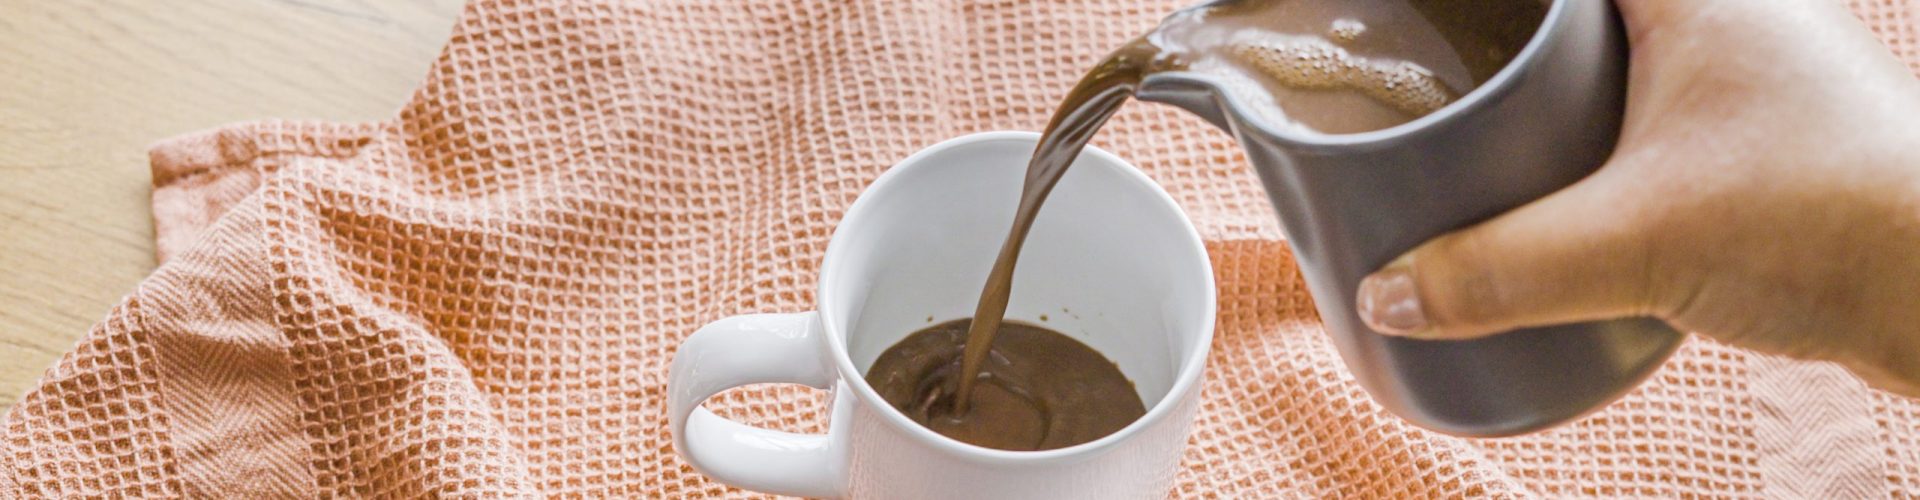 TopLay | Hot Chocolate